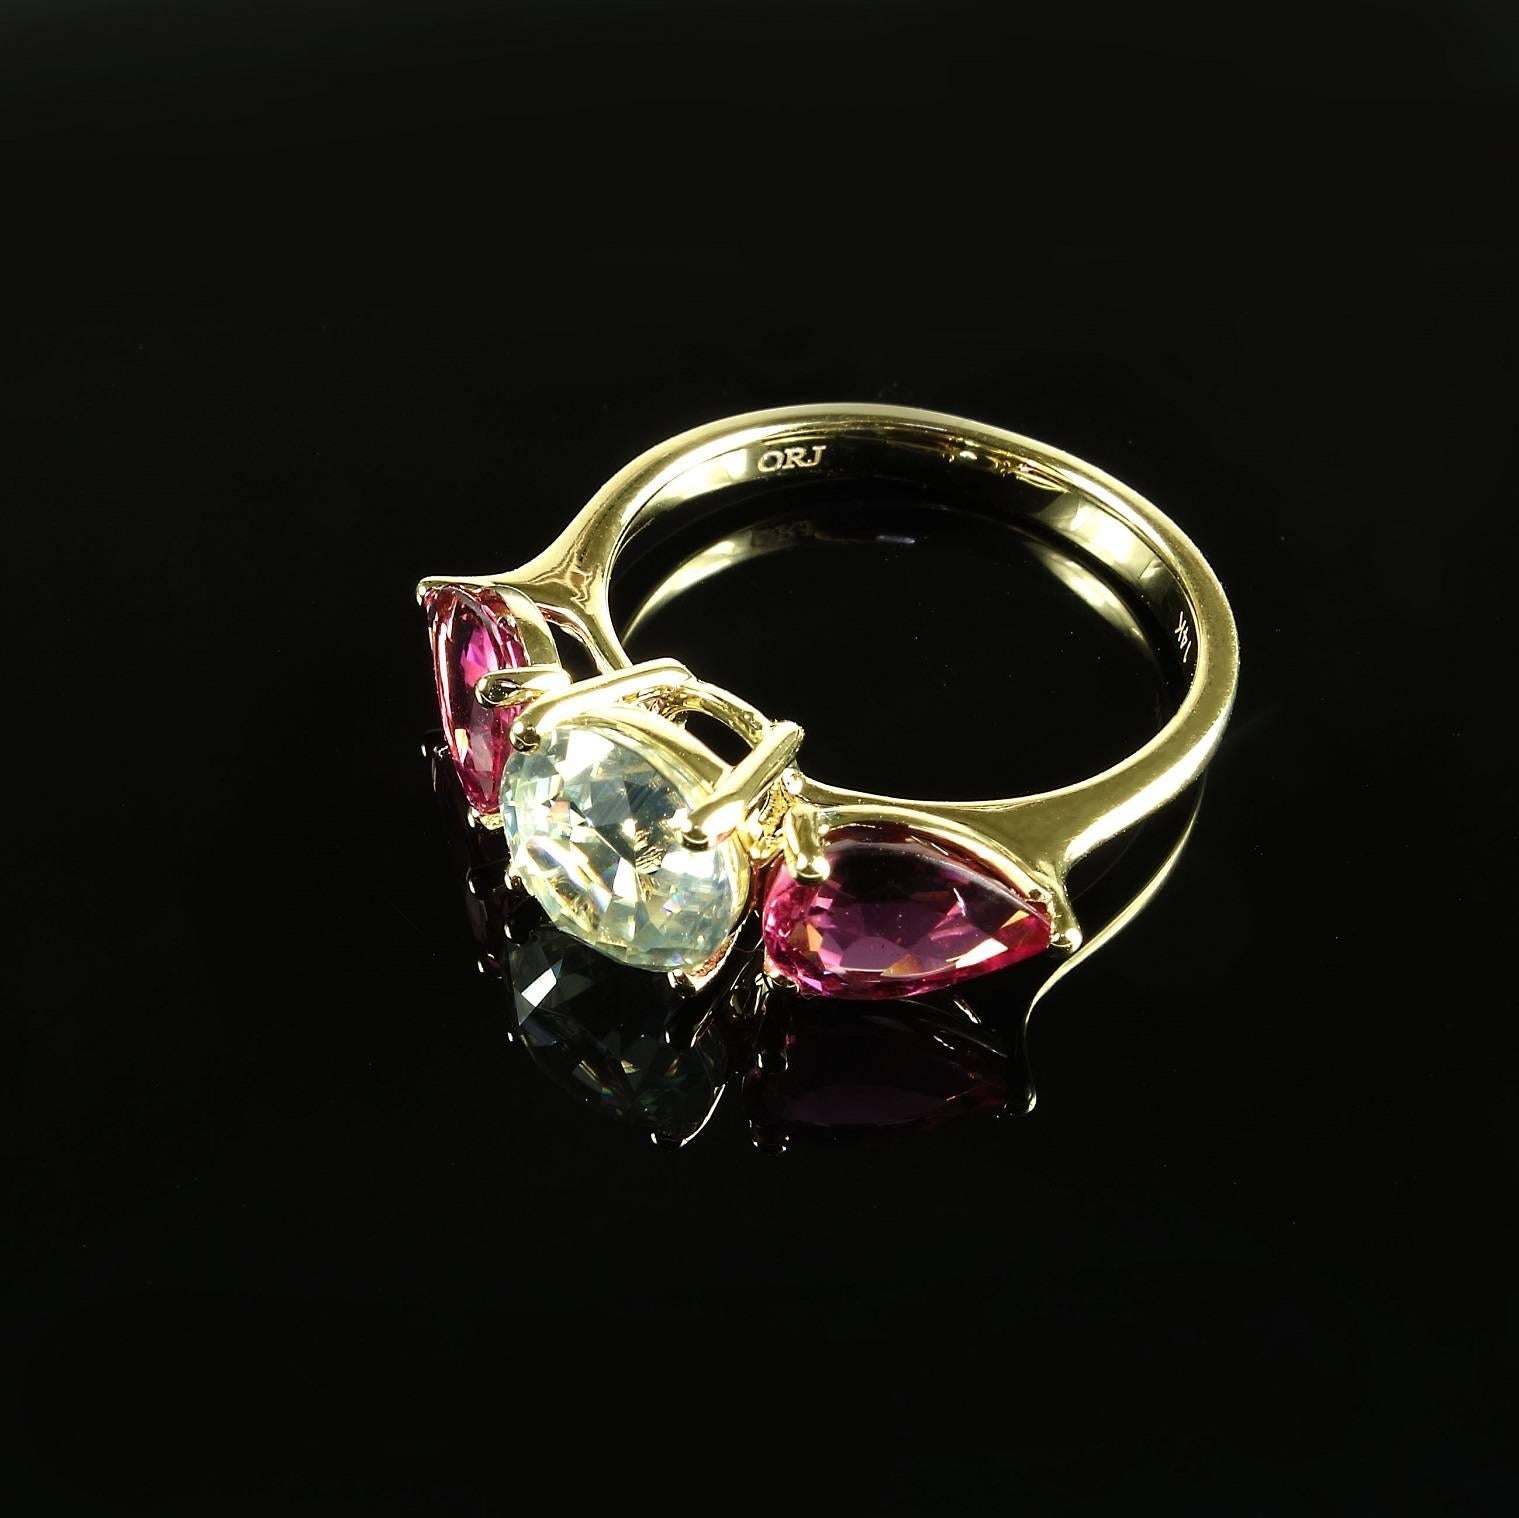 Round Cut AJD Sparkling White Cambodian Zircon and Pink Tourmaline Ring